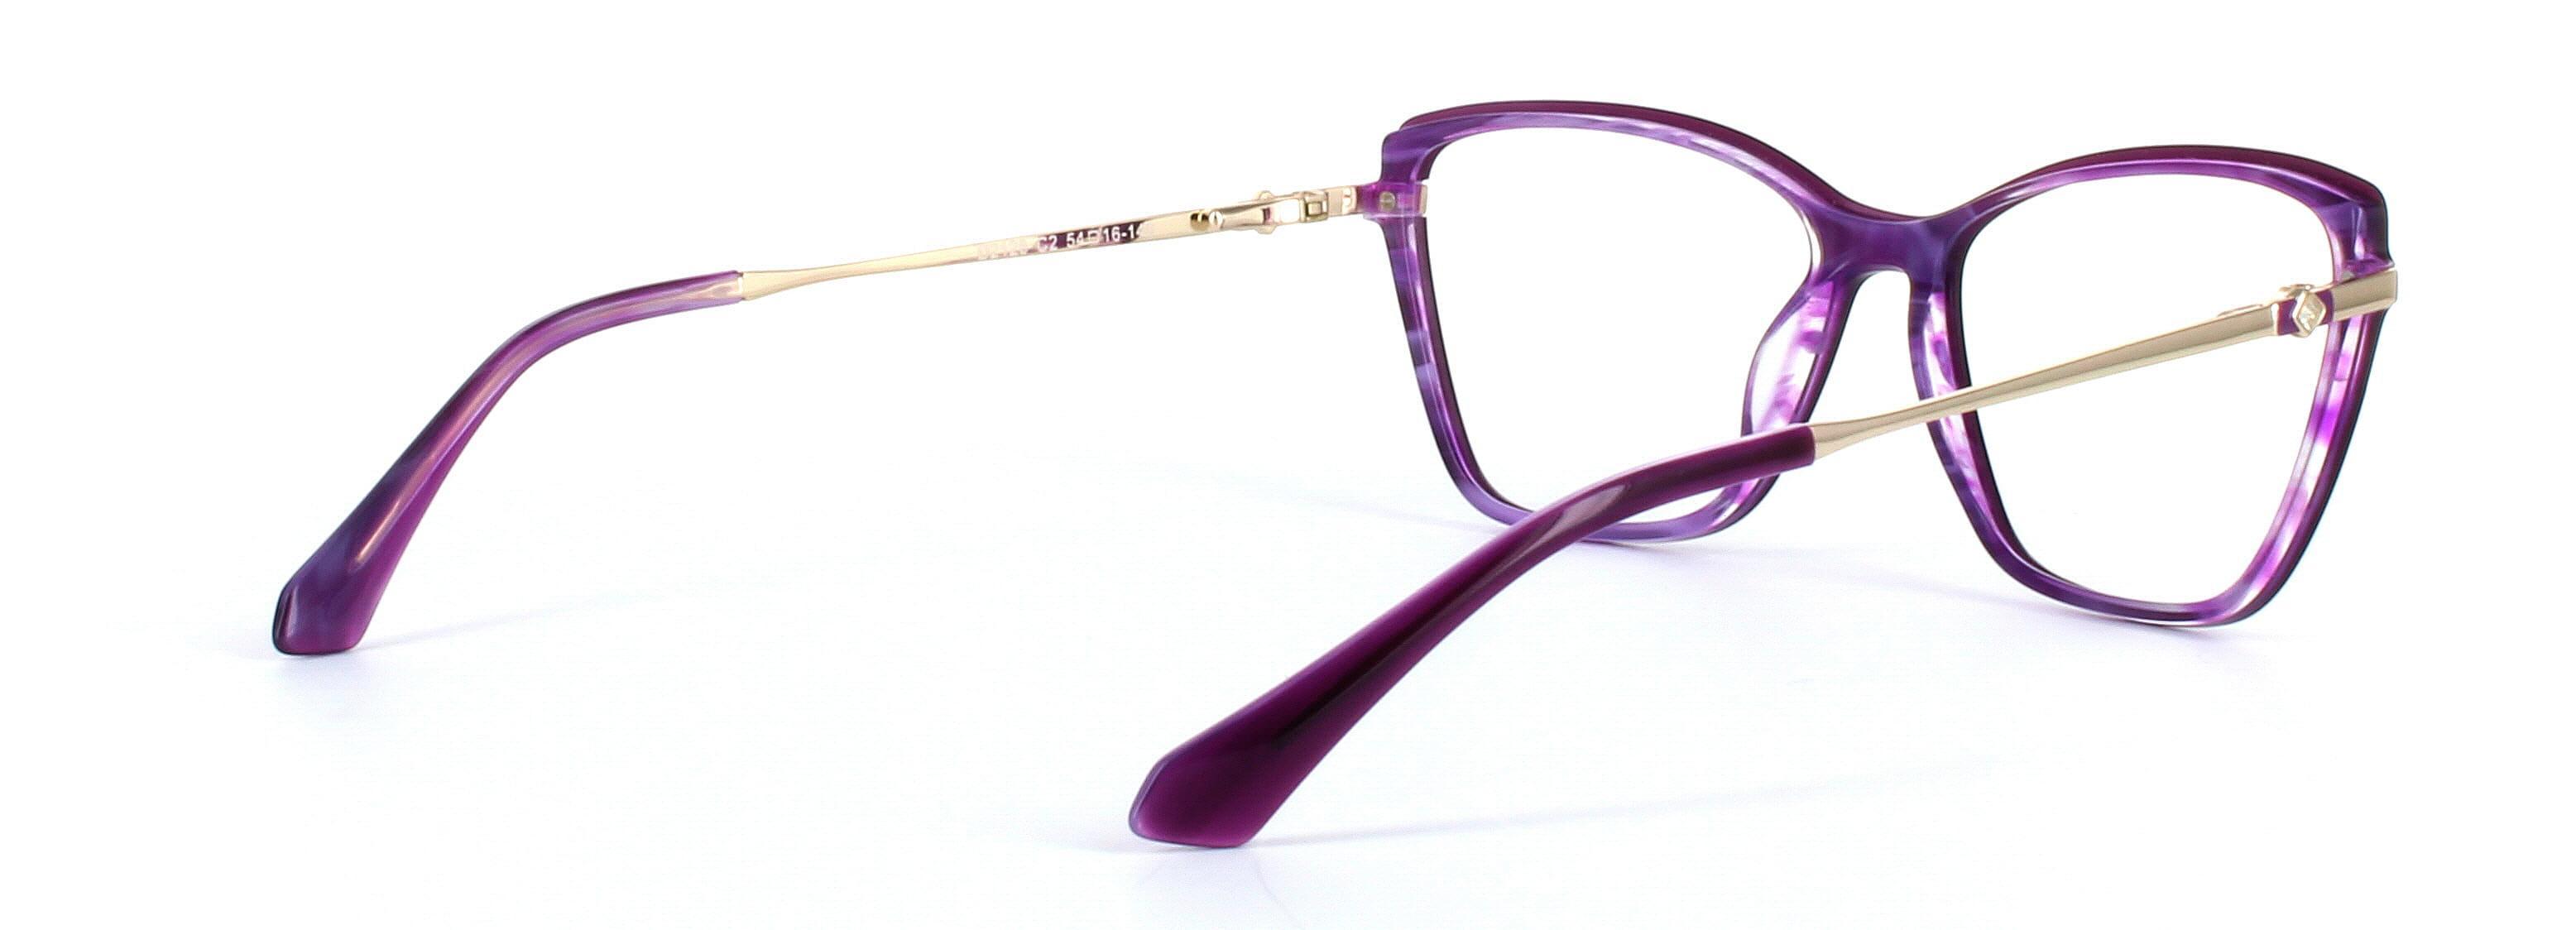 Jeanine Purple Full Rim Acetate Glasses - Image View 4